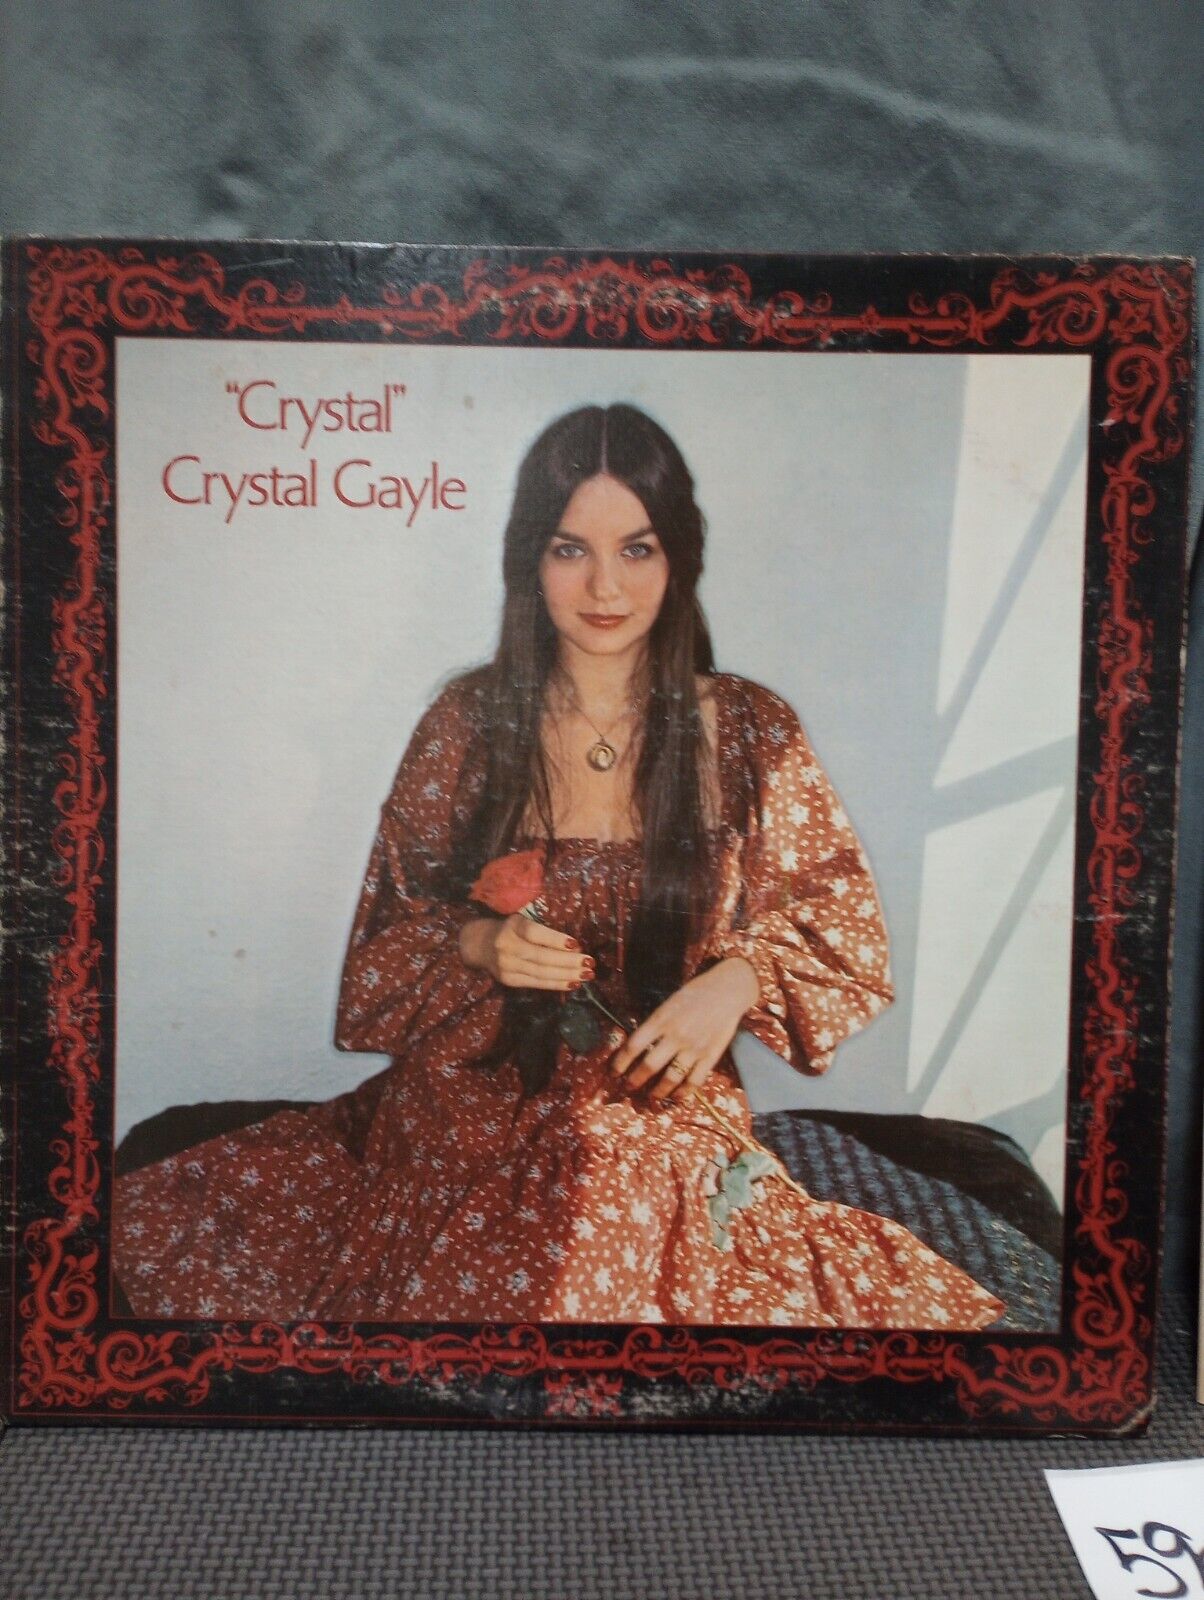 Vintage 70s Crystal Gayle Crystal Vinyl Record Album LP 1976 Do It Over Again